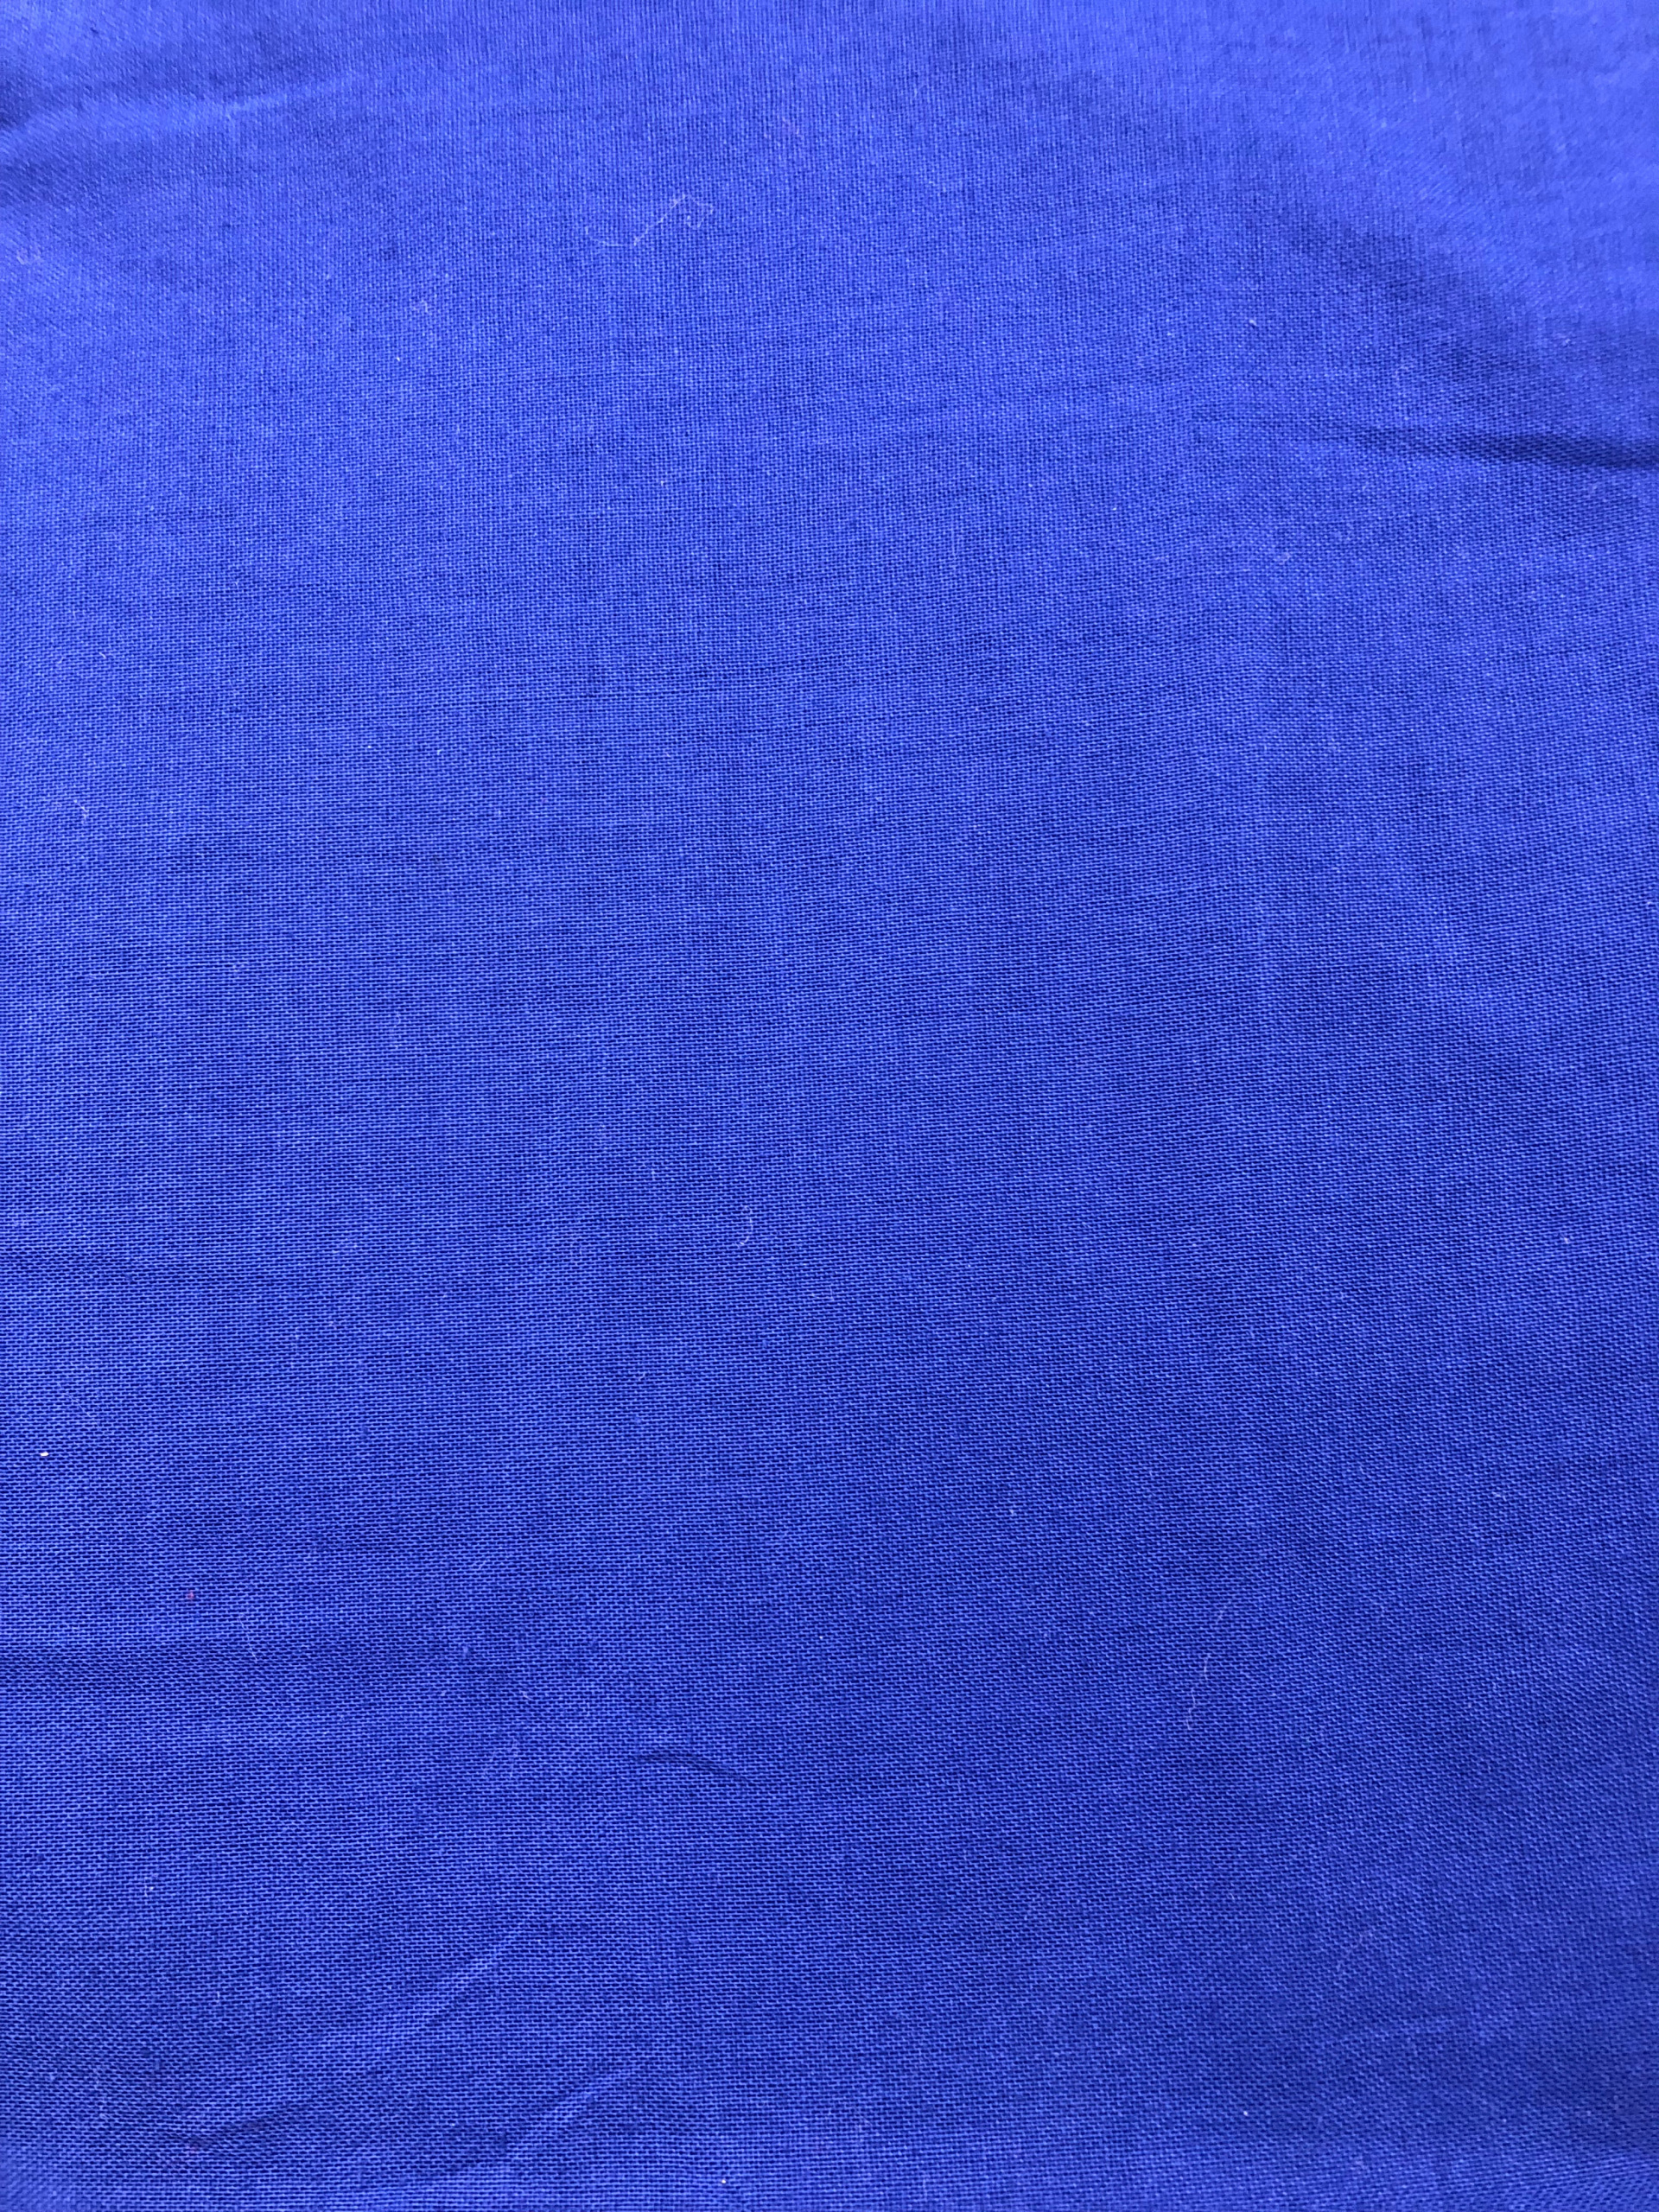 Syd's Seams Blue Cotton Fabric